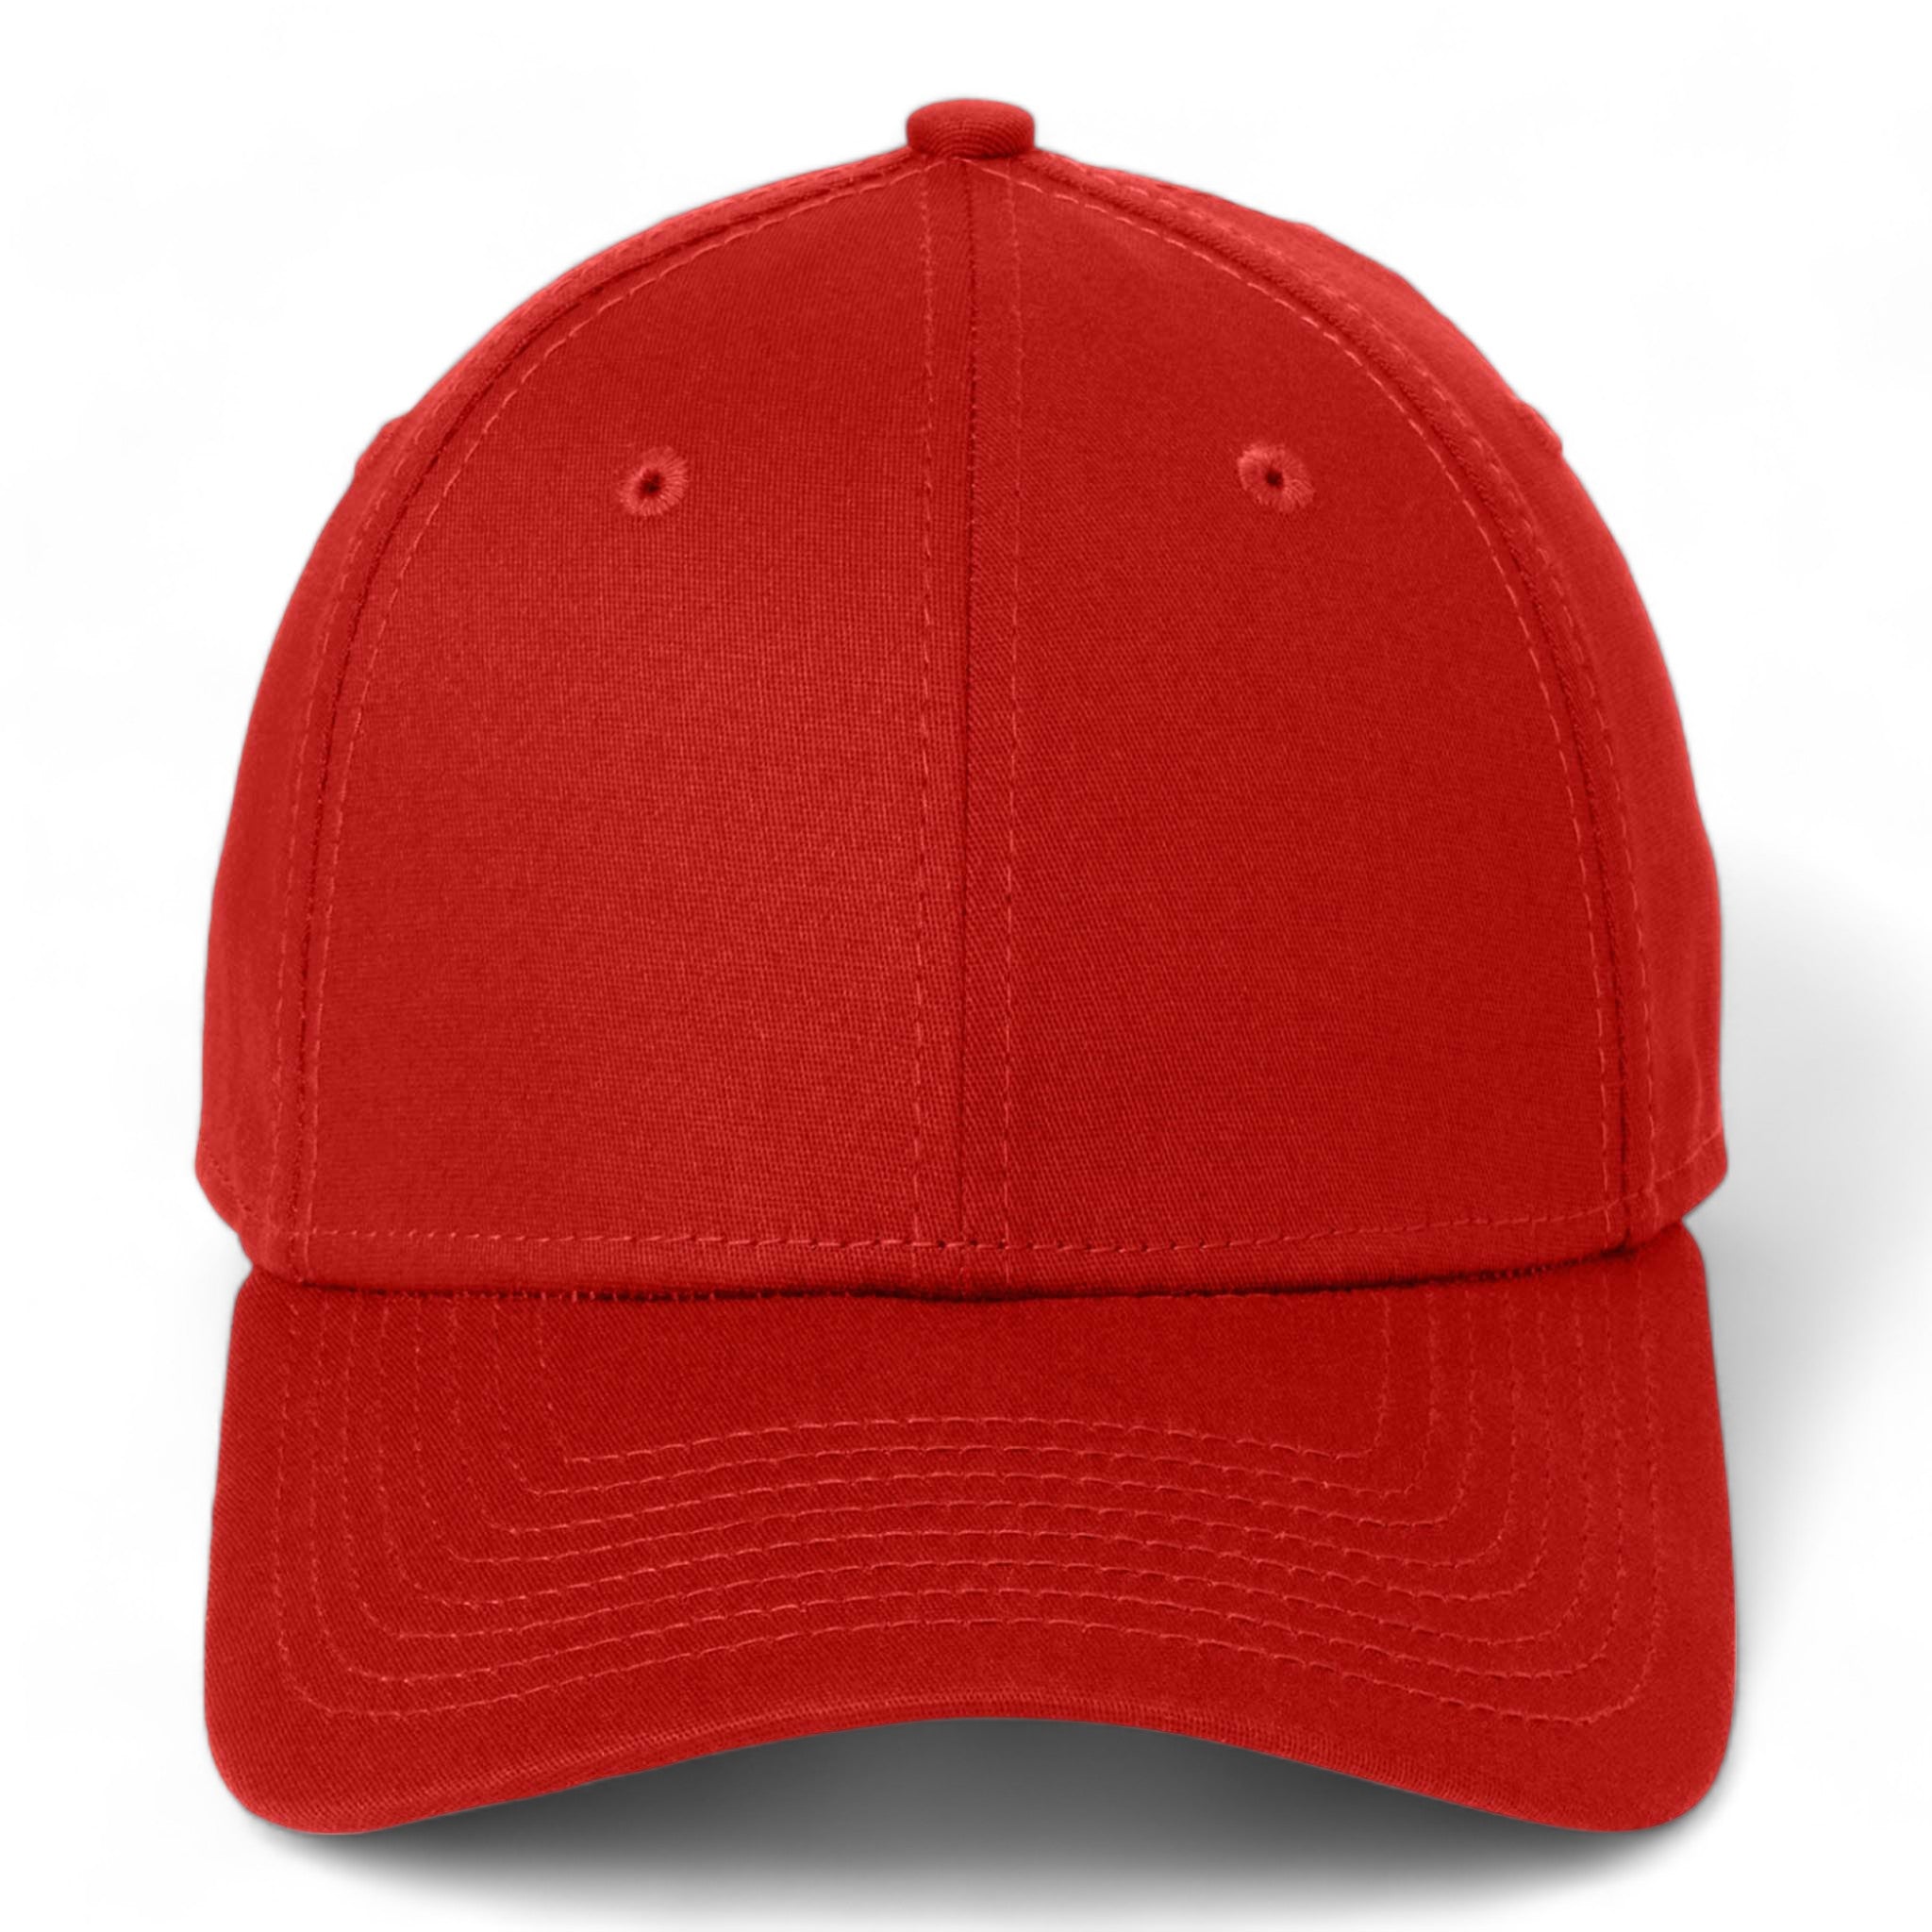 Front view of New Era NE1000 custom hat in scarlet red